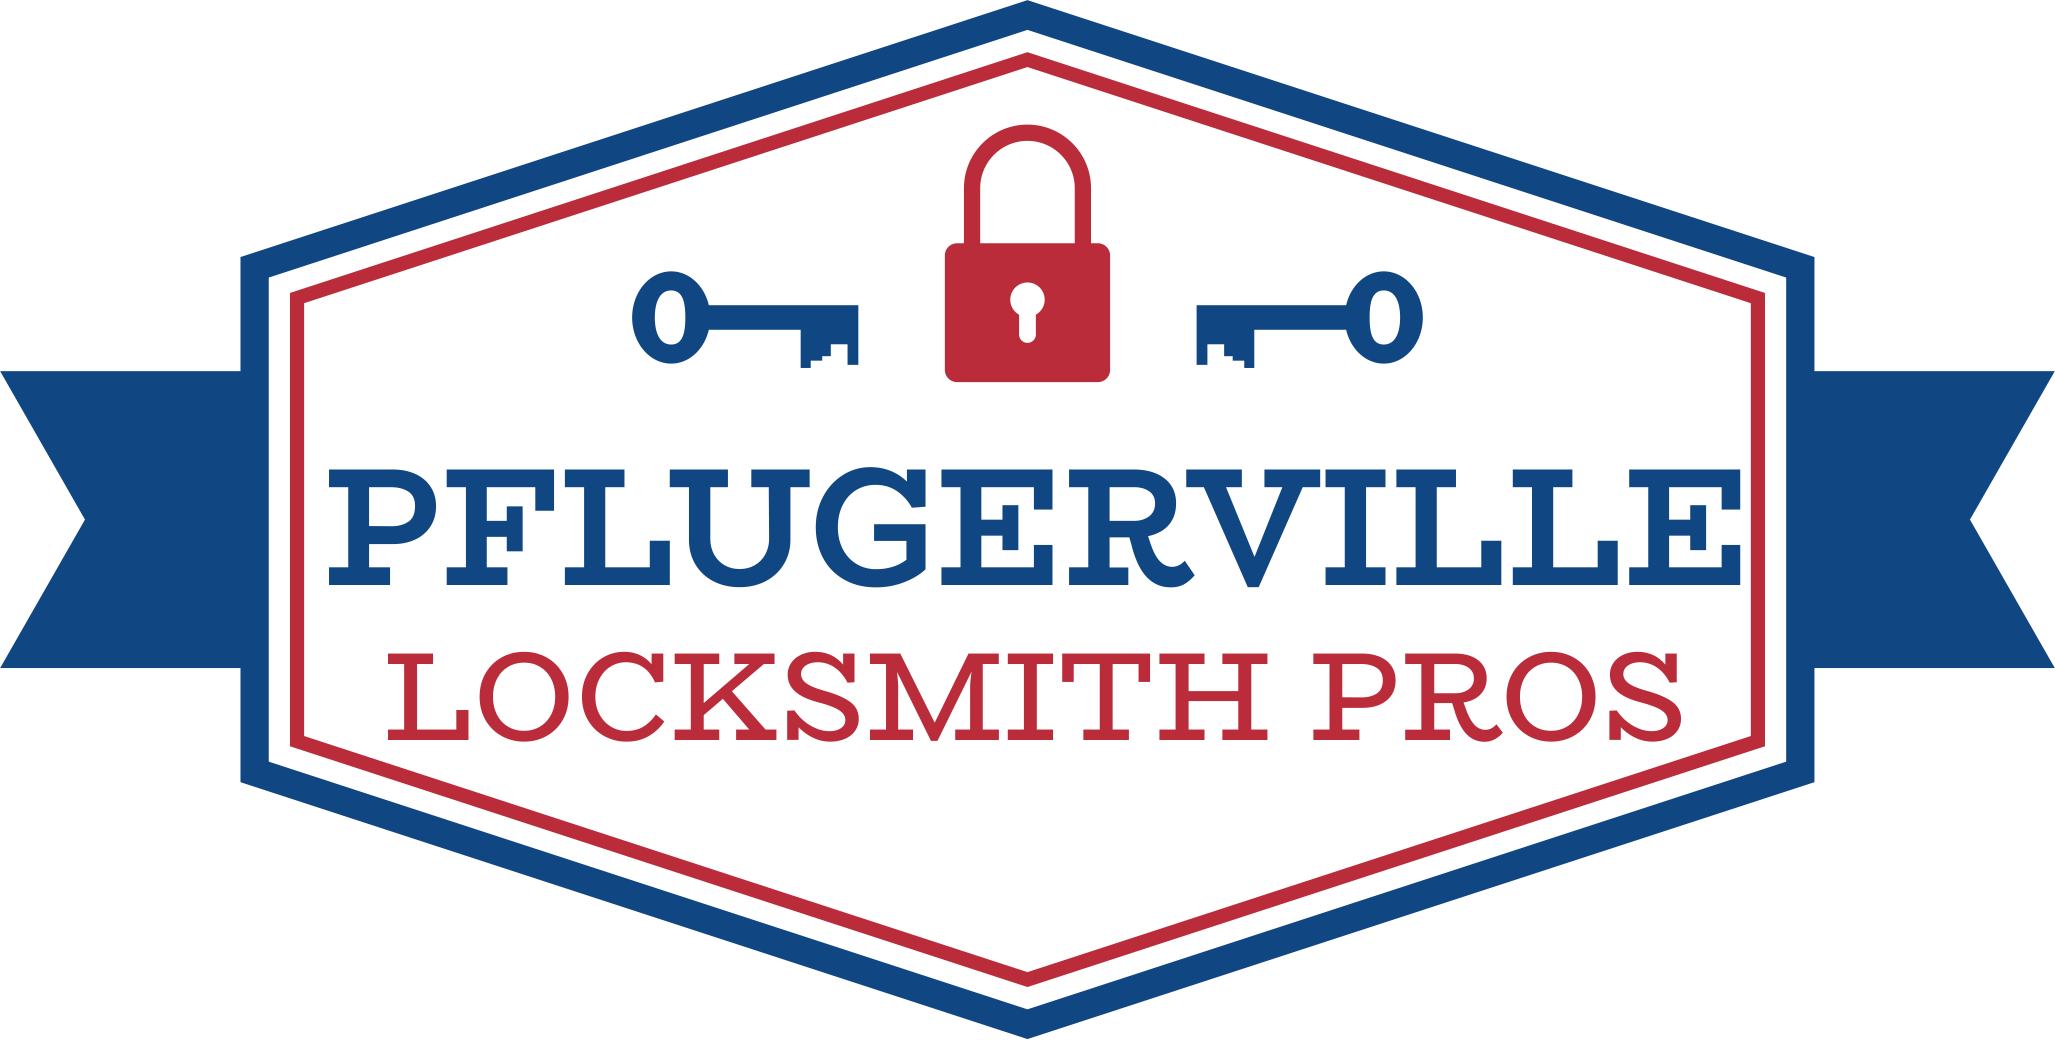 Pflugerville Locksmith Pros review